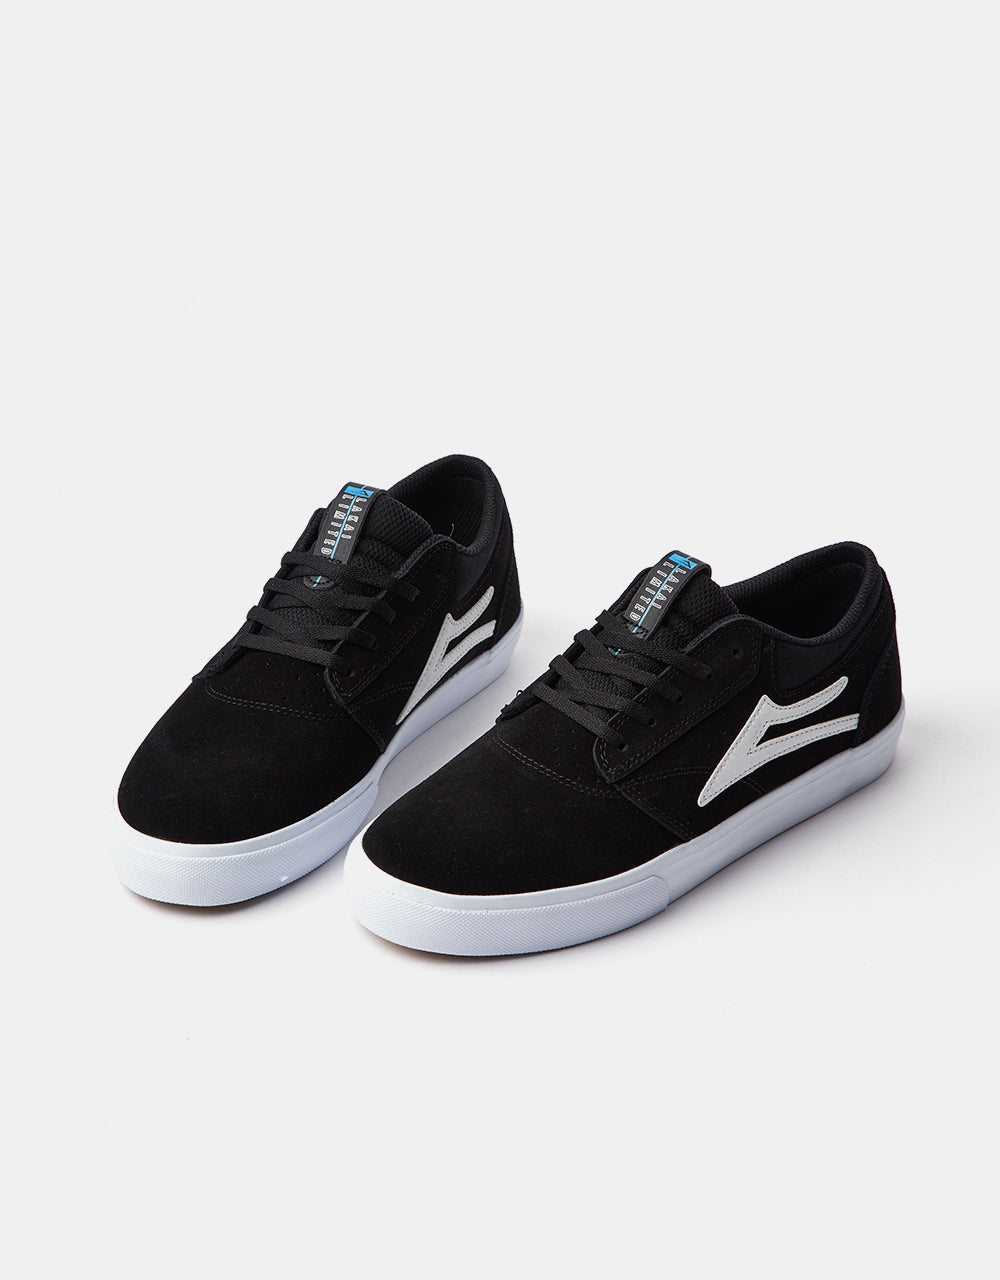 Lakai Griffin Skate Shoes - Black Suede